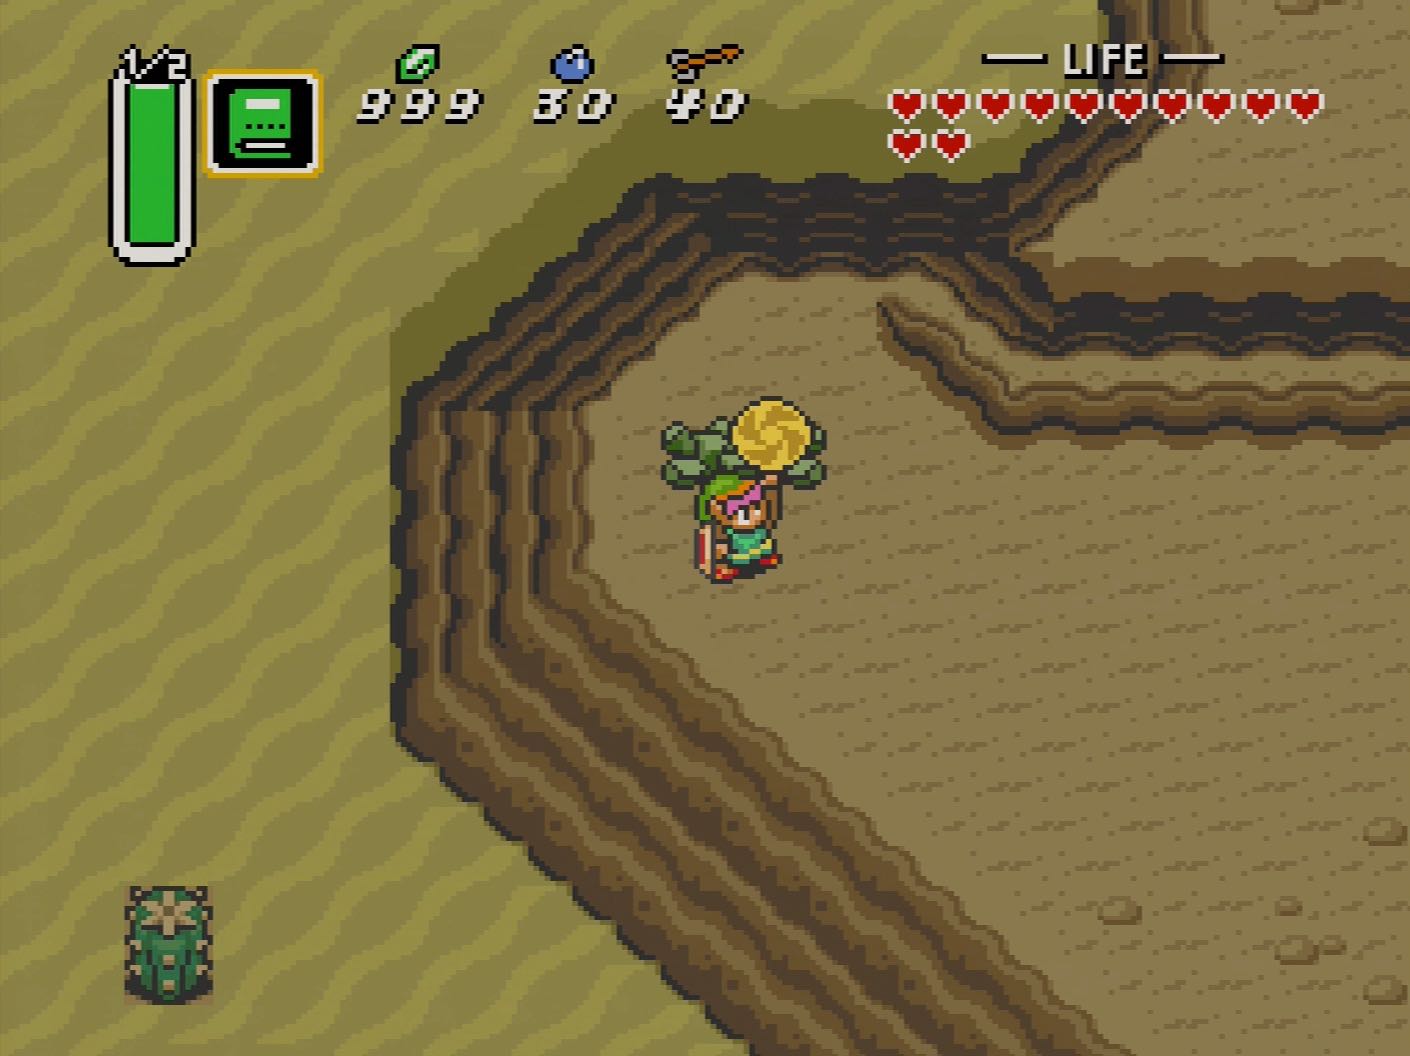 Super NES Retro Review: The Legend of Zelda: A Link to the Past